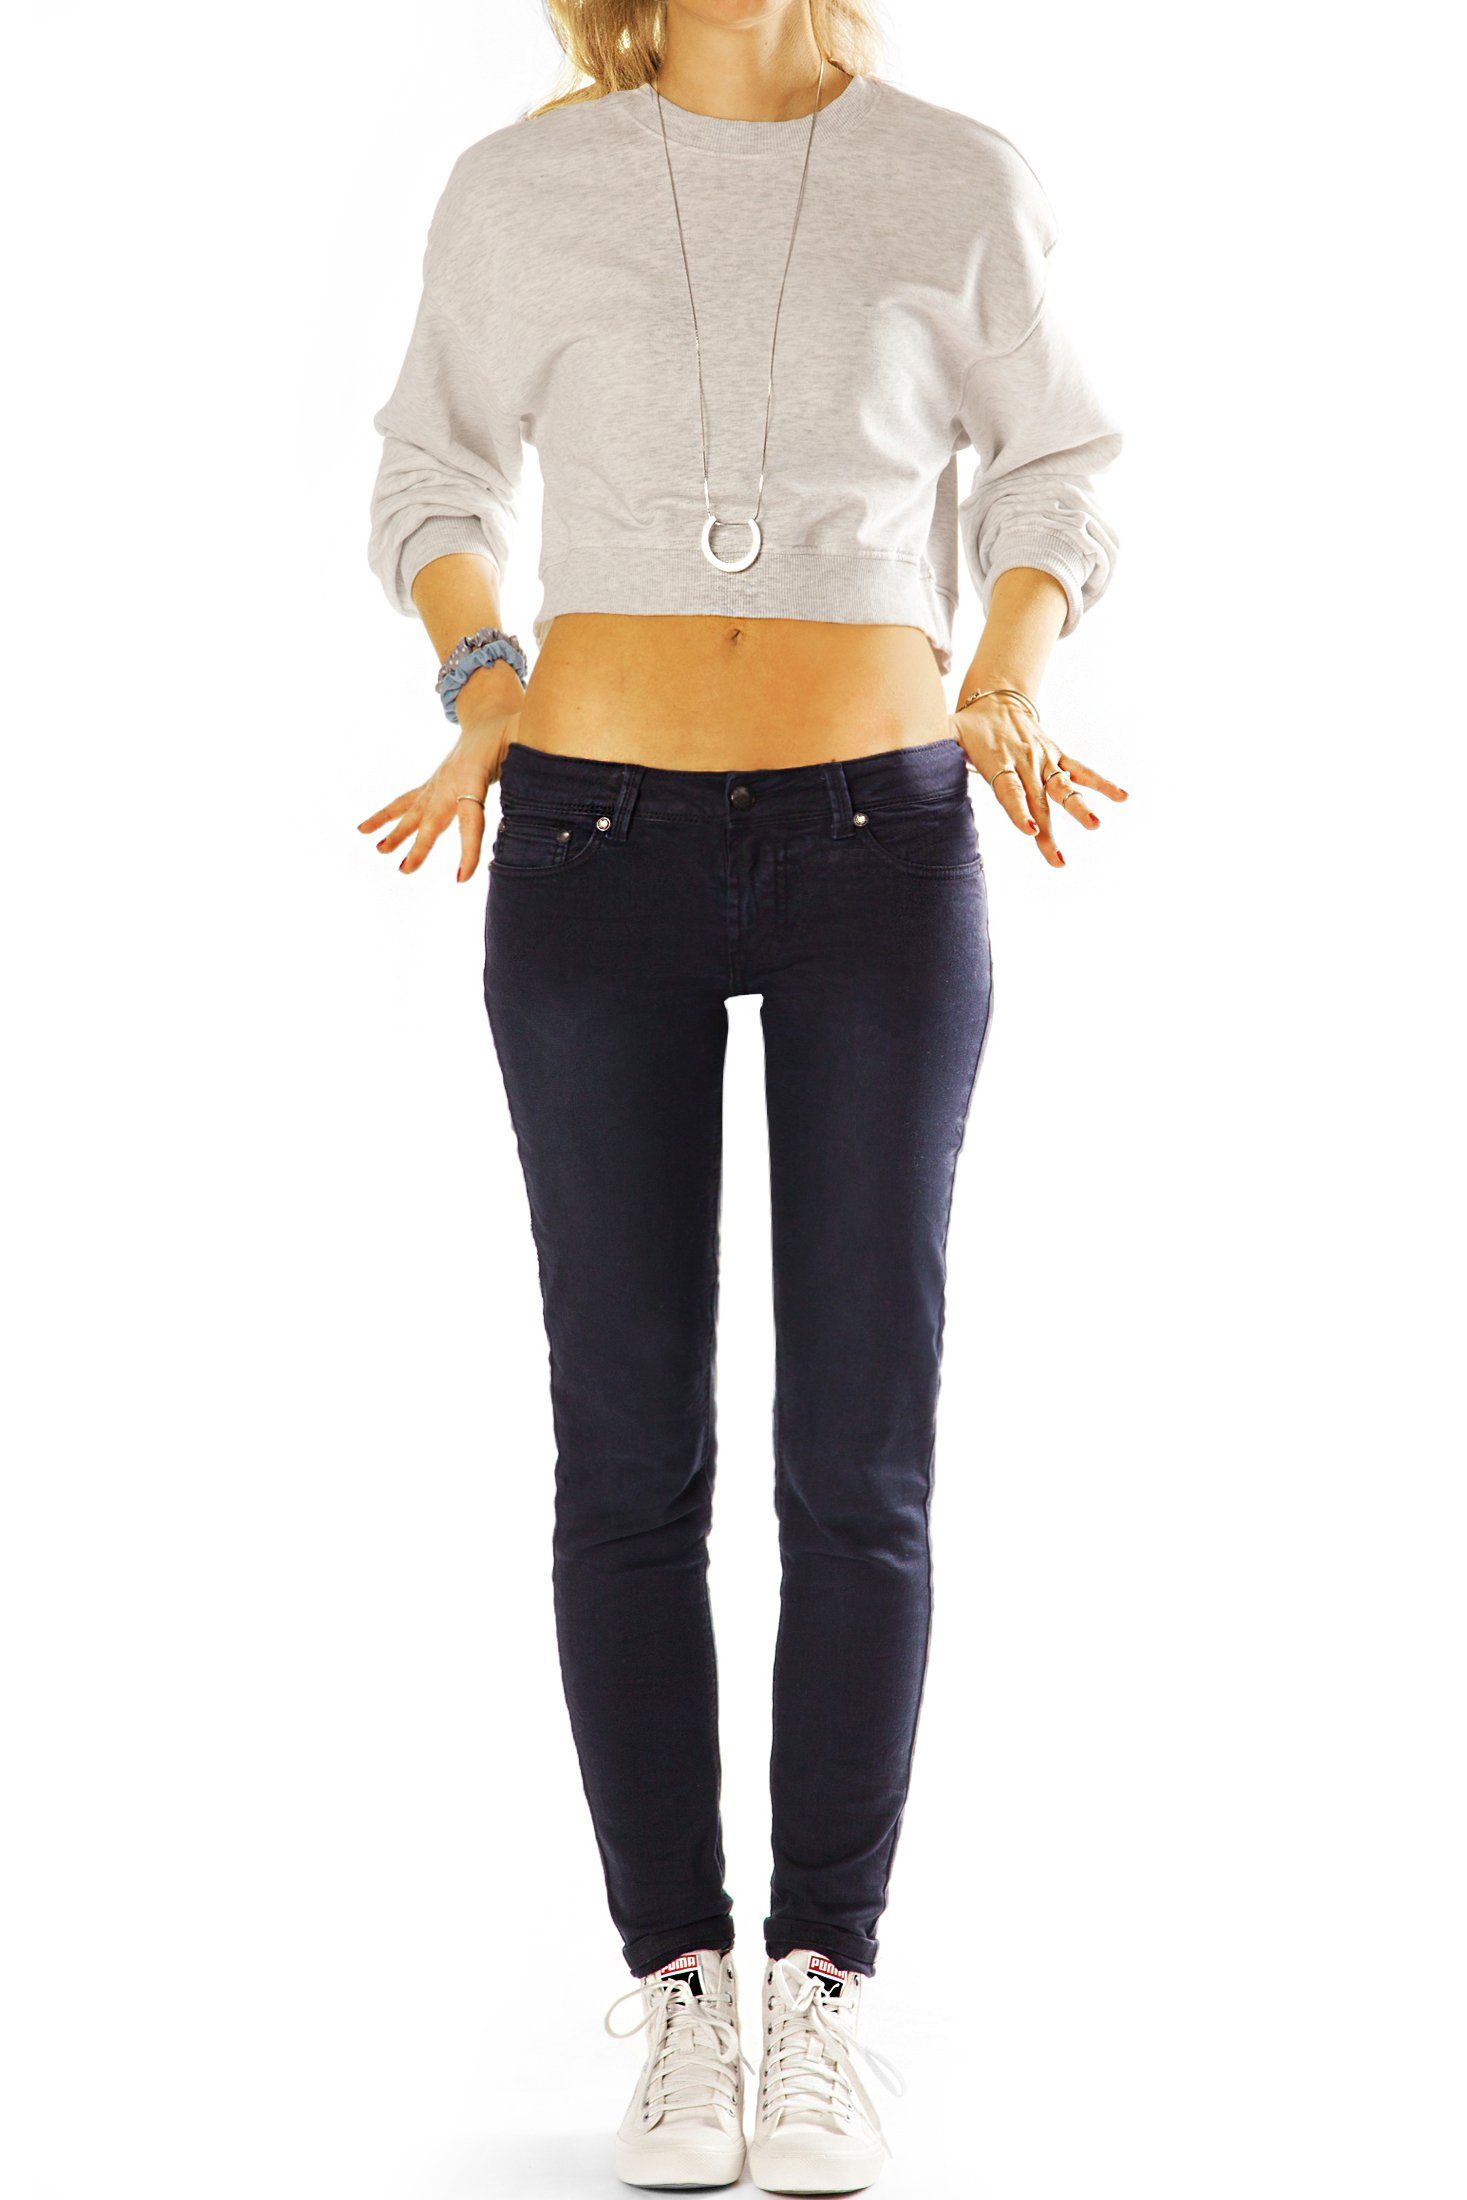 be styled Low-rise-Jeans Low Damen 5-Pocket-Style j18L-1 Rise Skinny - mit hüftige Hüftjeans Röhrenjeans - Stretch-Anteil, Hose